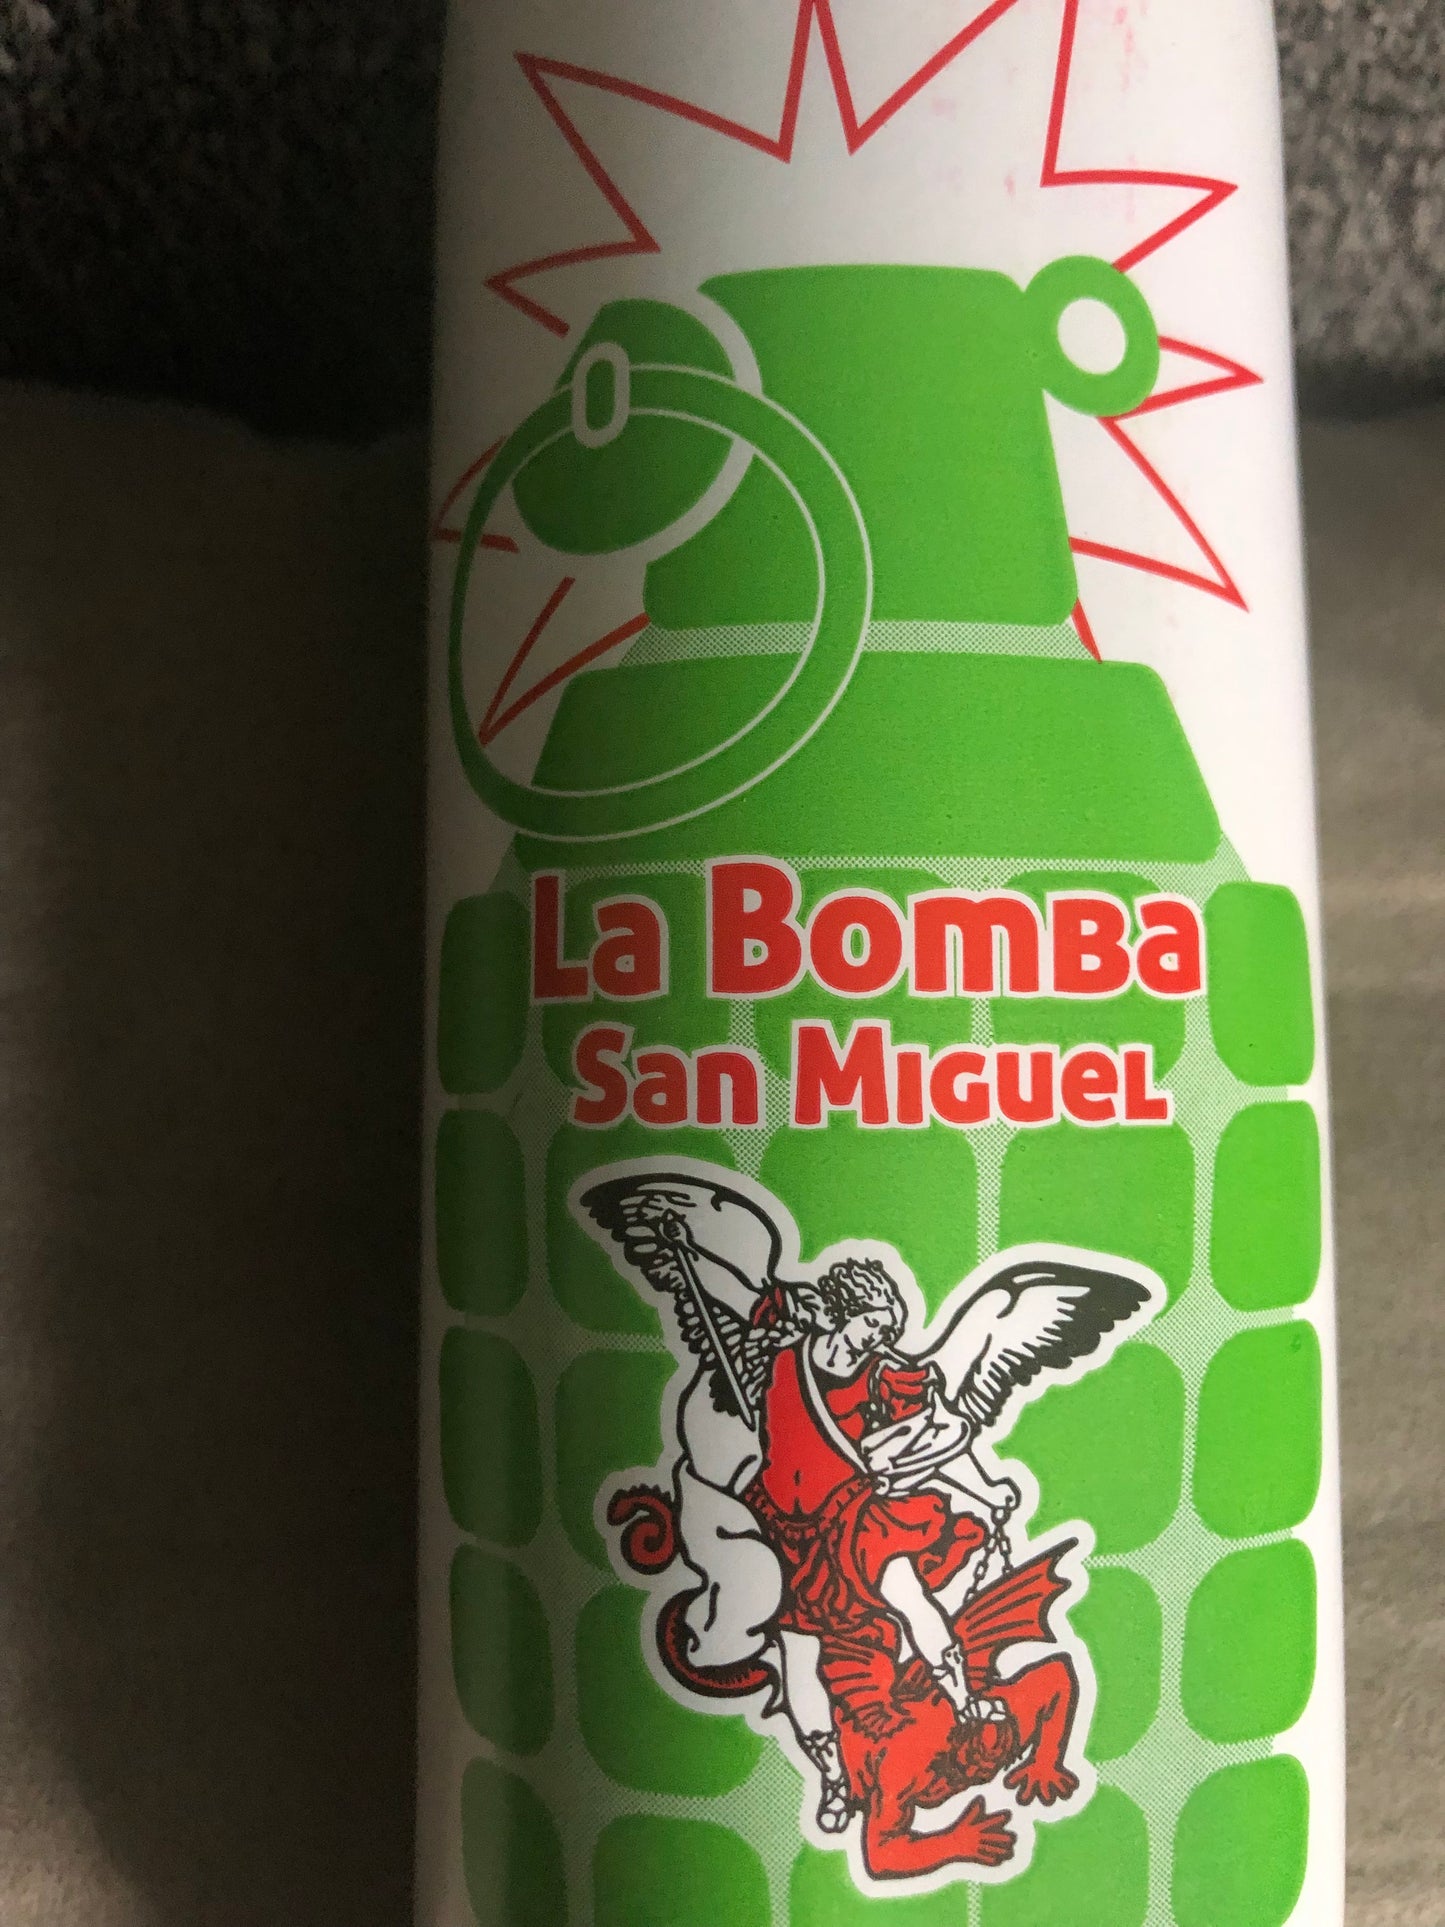 La Bomba San Miguel The Bomb